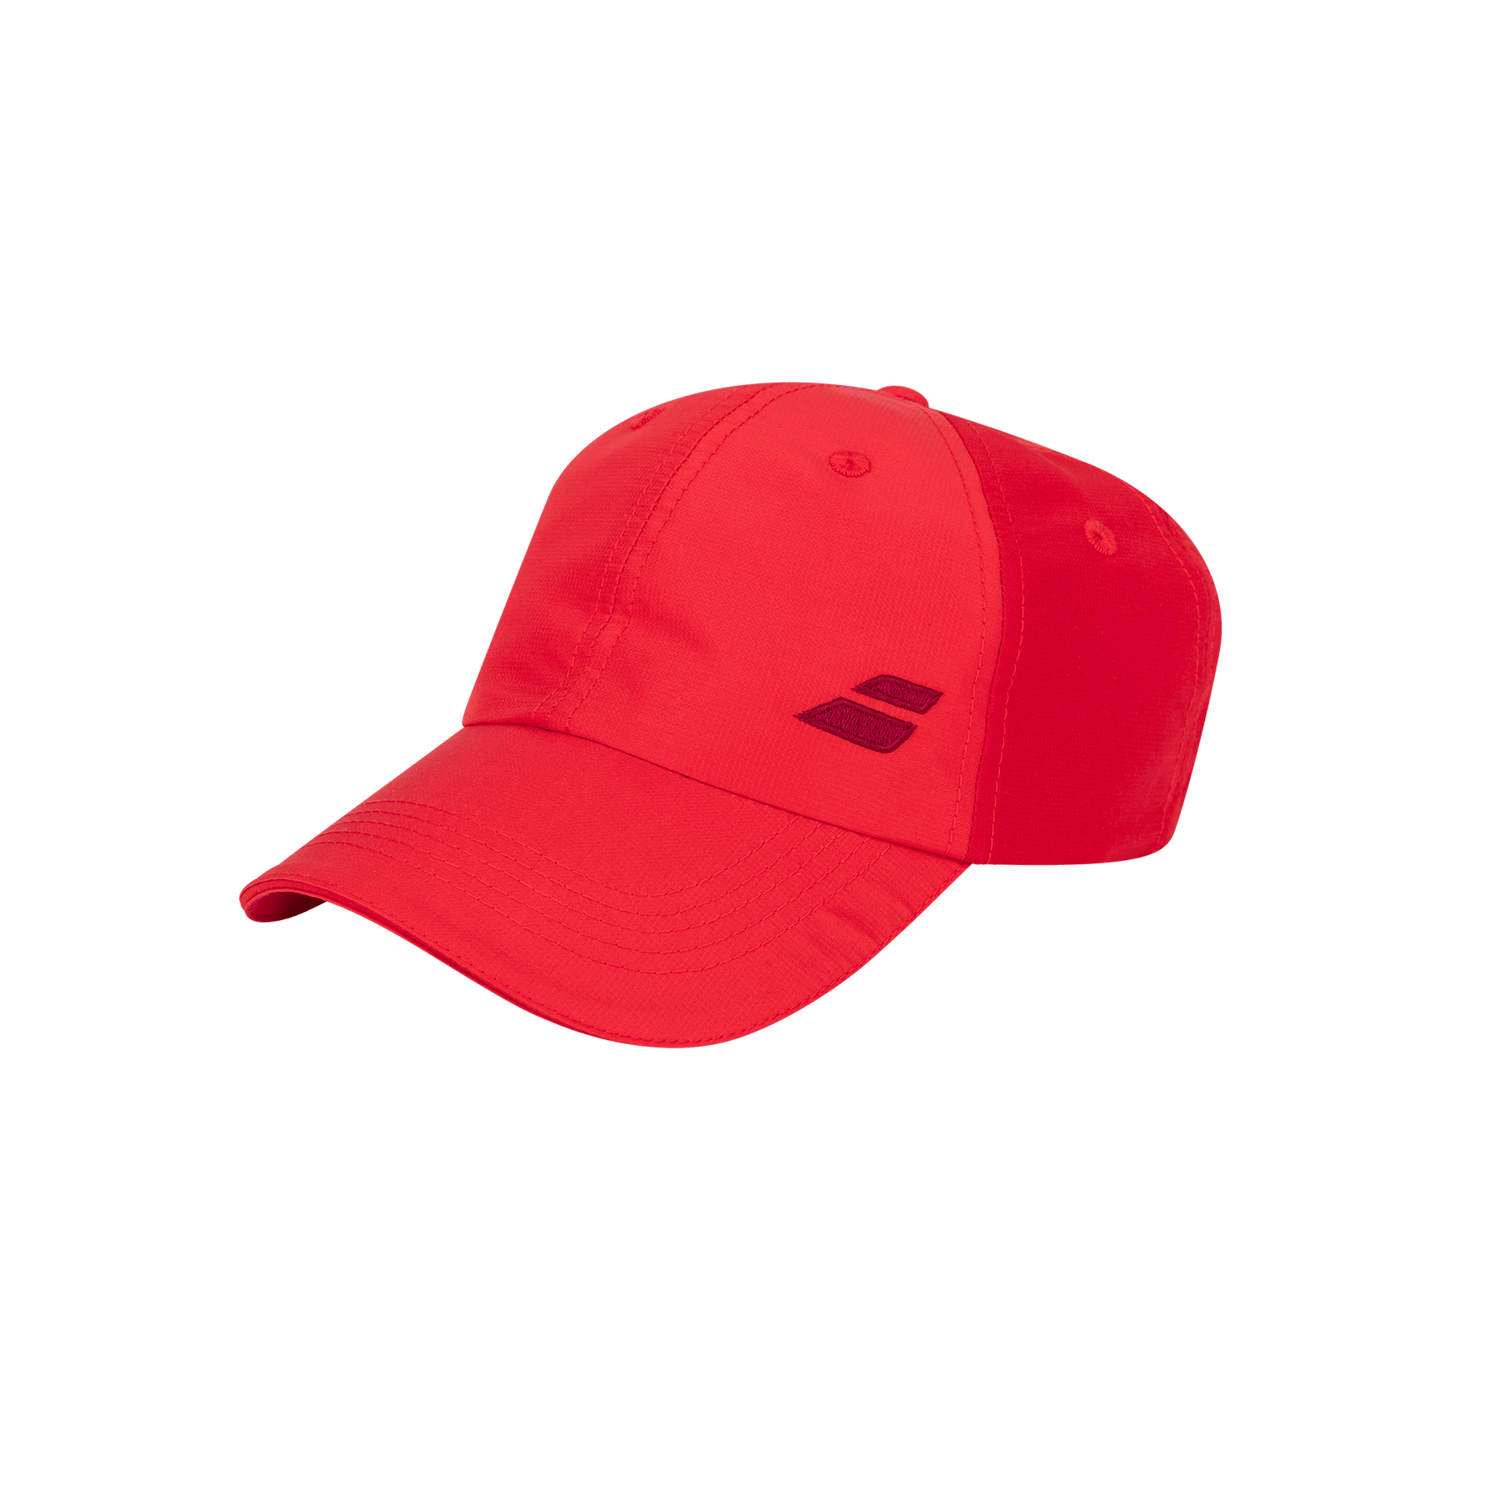 Unisex Babolat cap, one size fits most